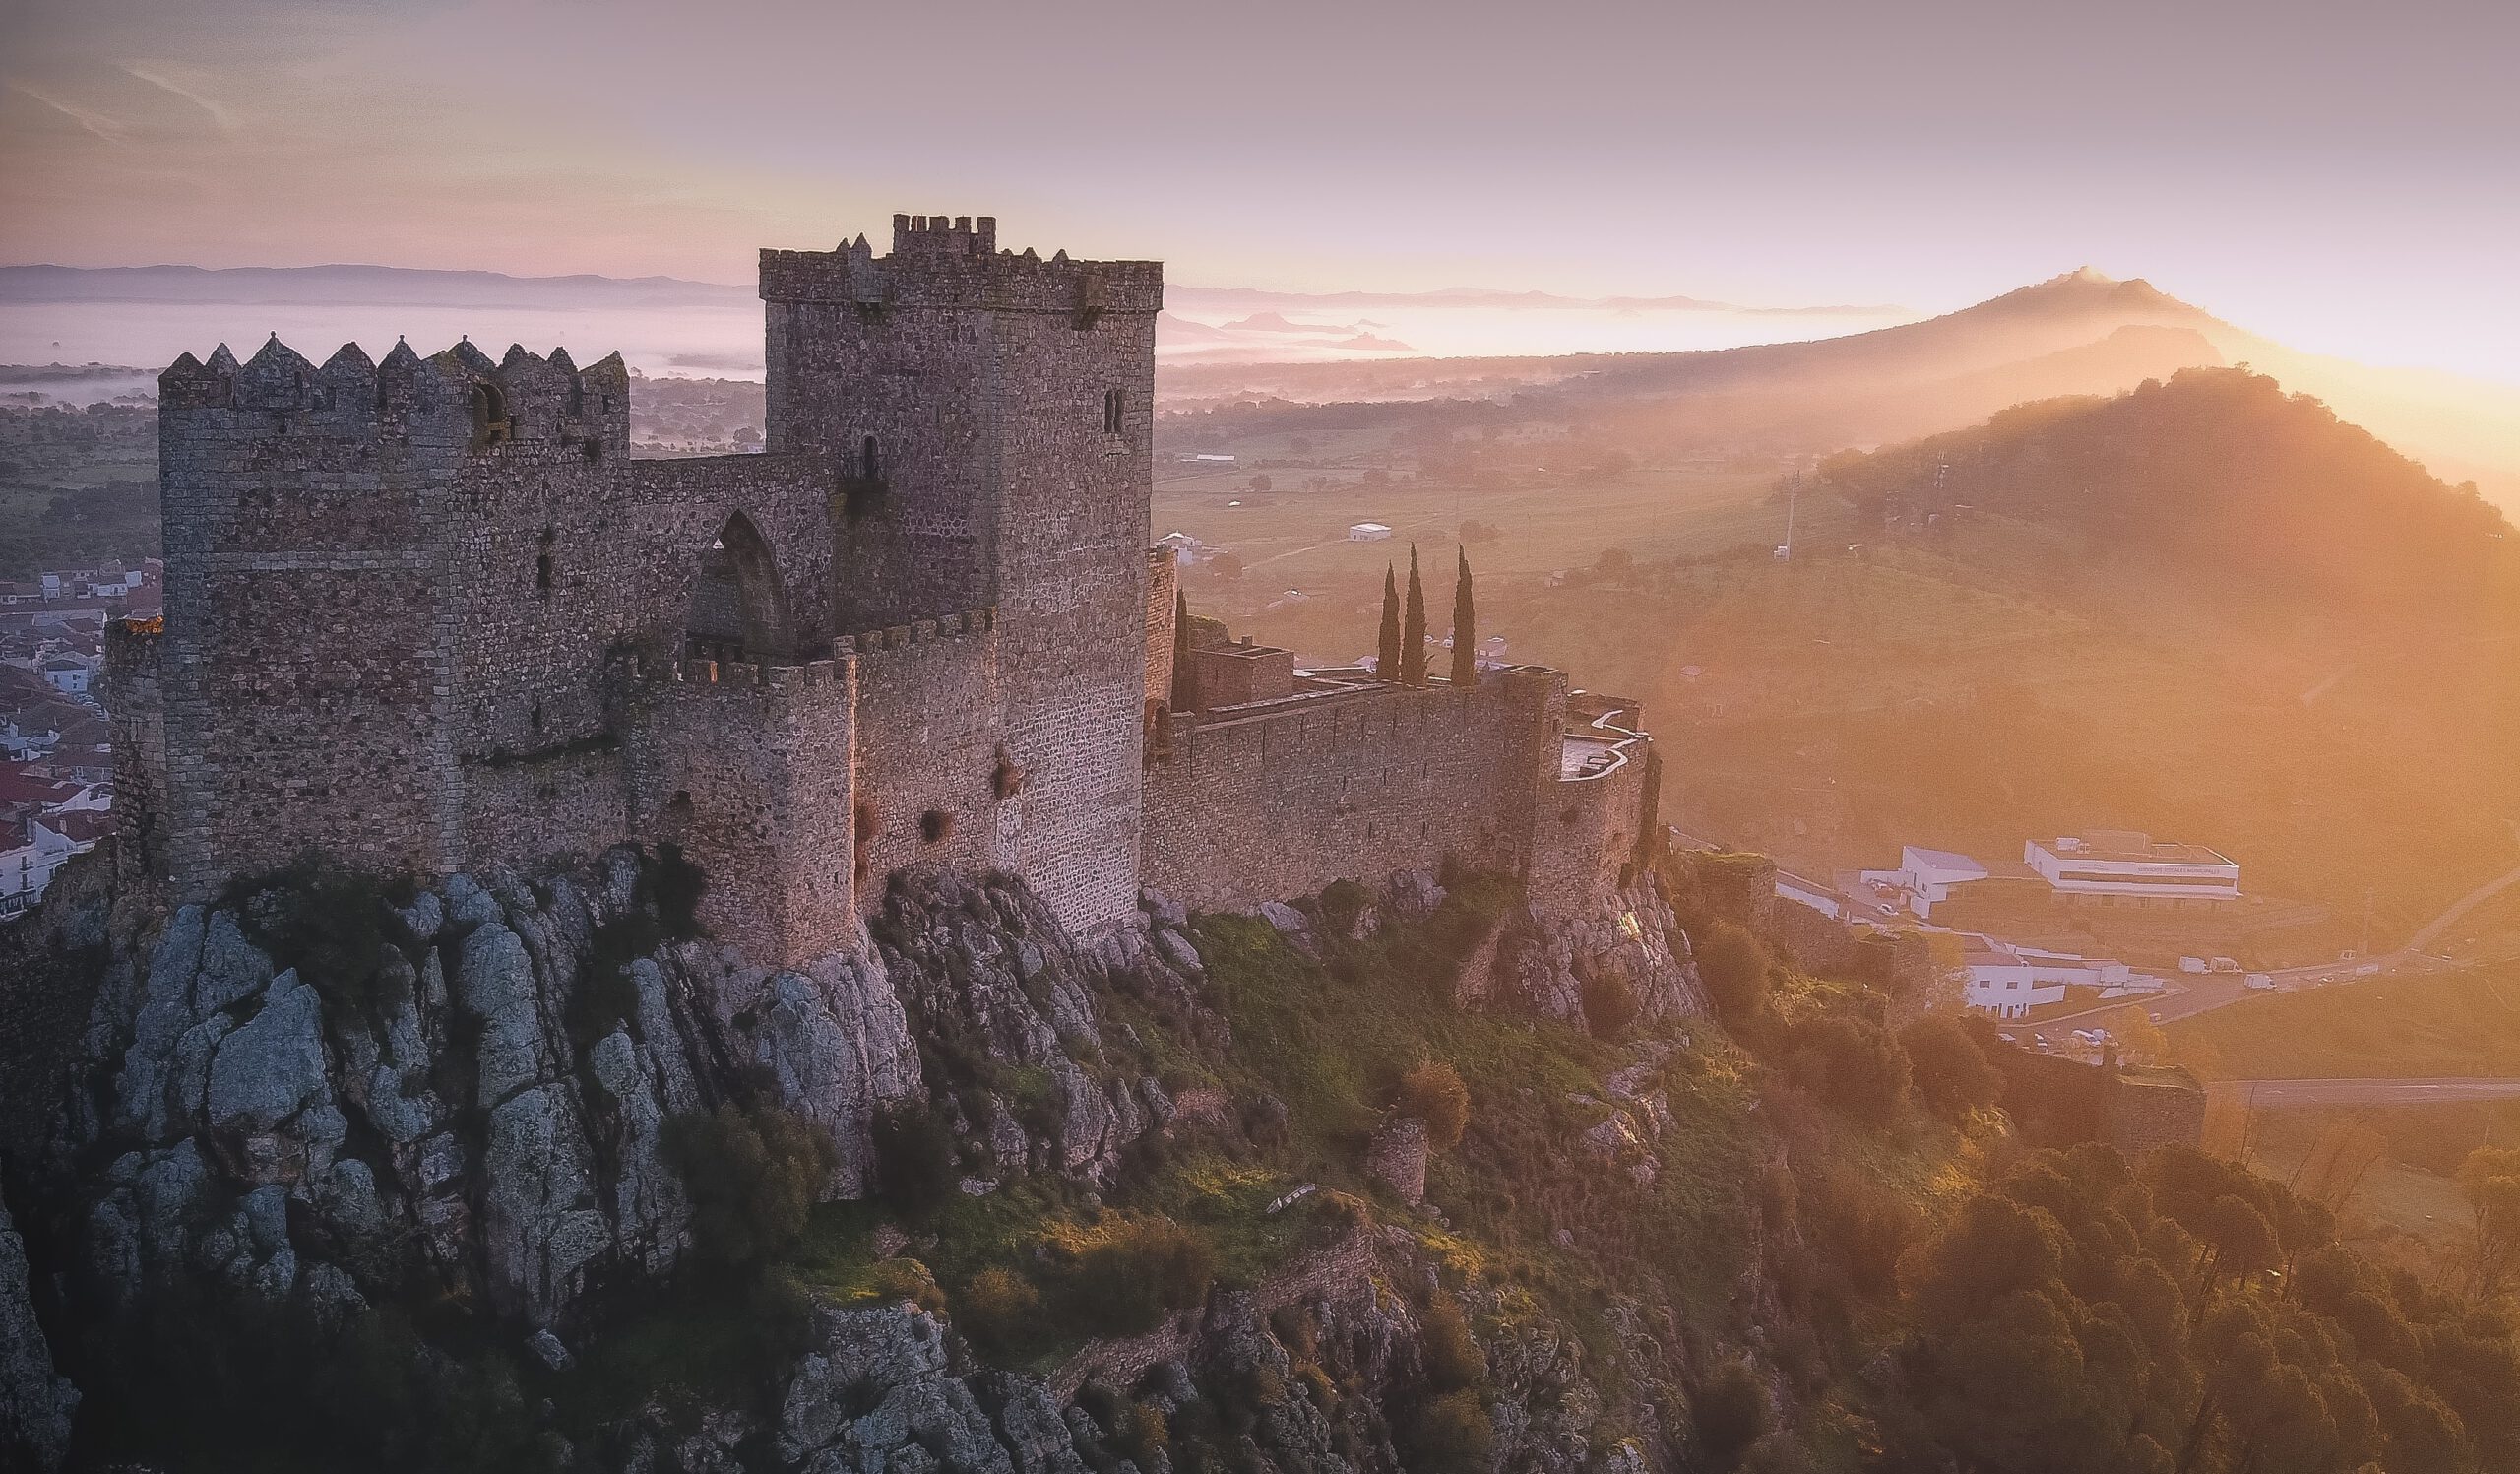 //www.cwto.de/wp-content/uploads/2018/02/breathtaking-shot-medieval-castle-province-badajoz-extremadura-spain-scaled.jpg